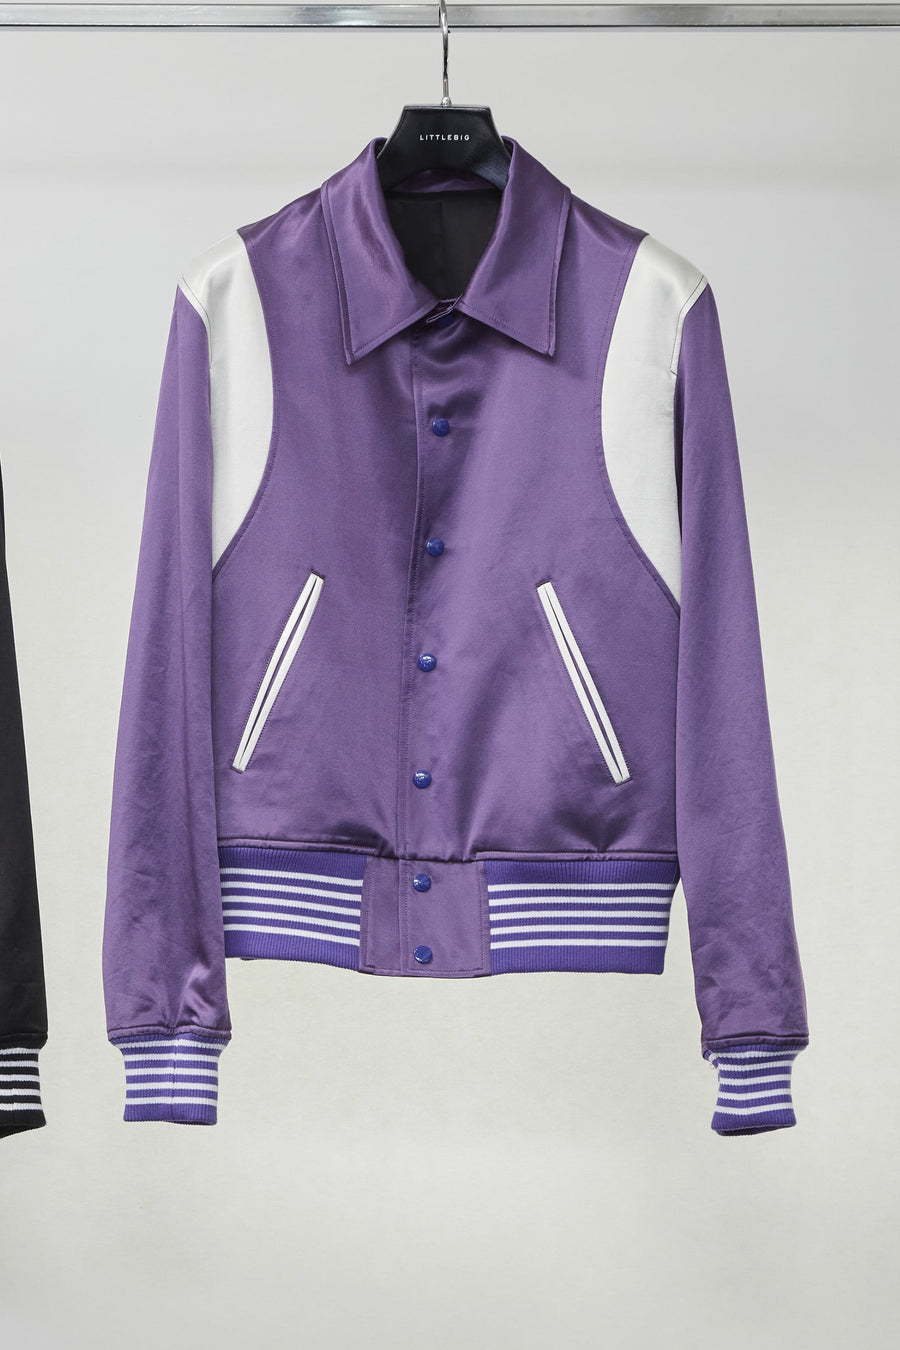 LITTLEBIG  Award Jacket（Purple）